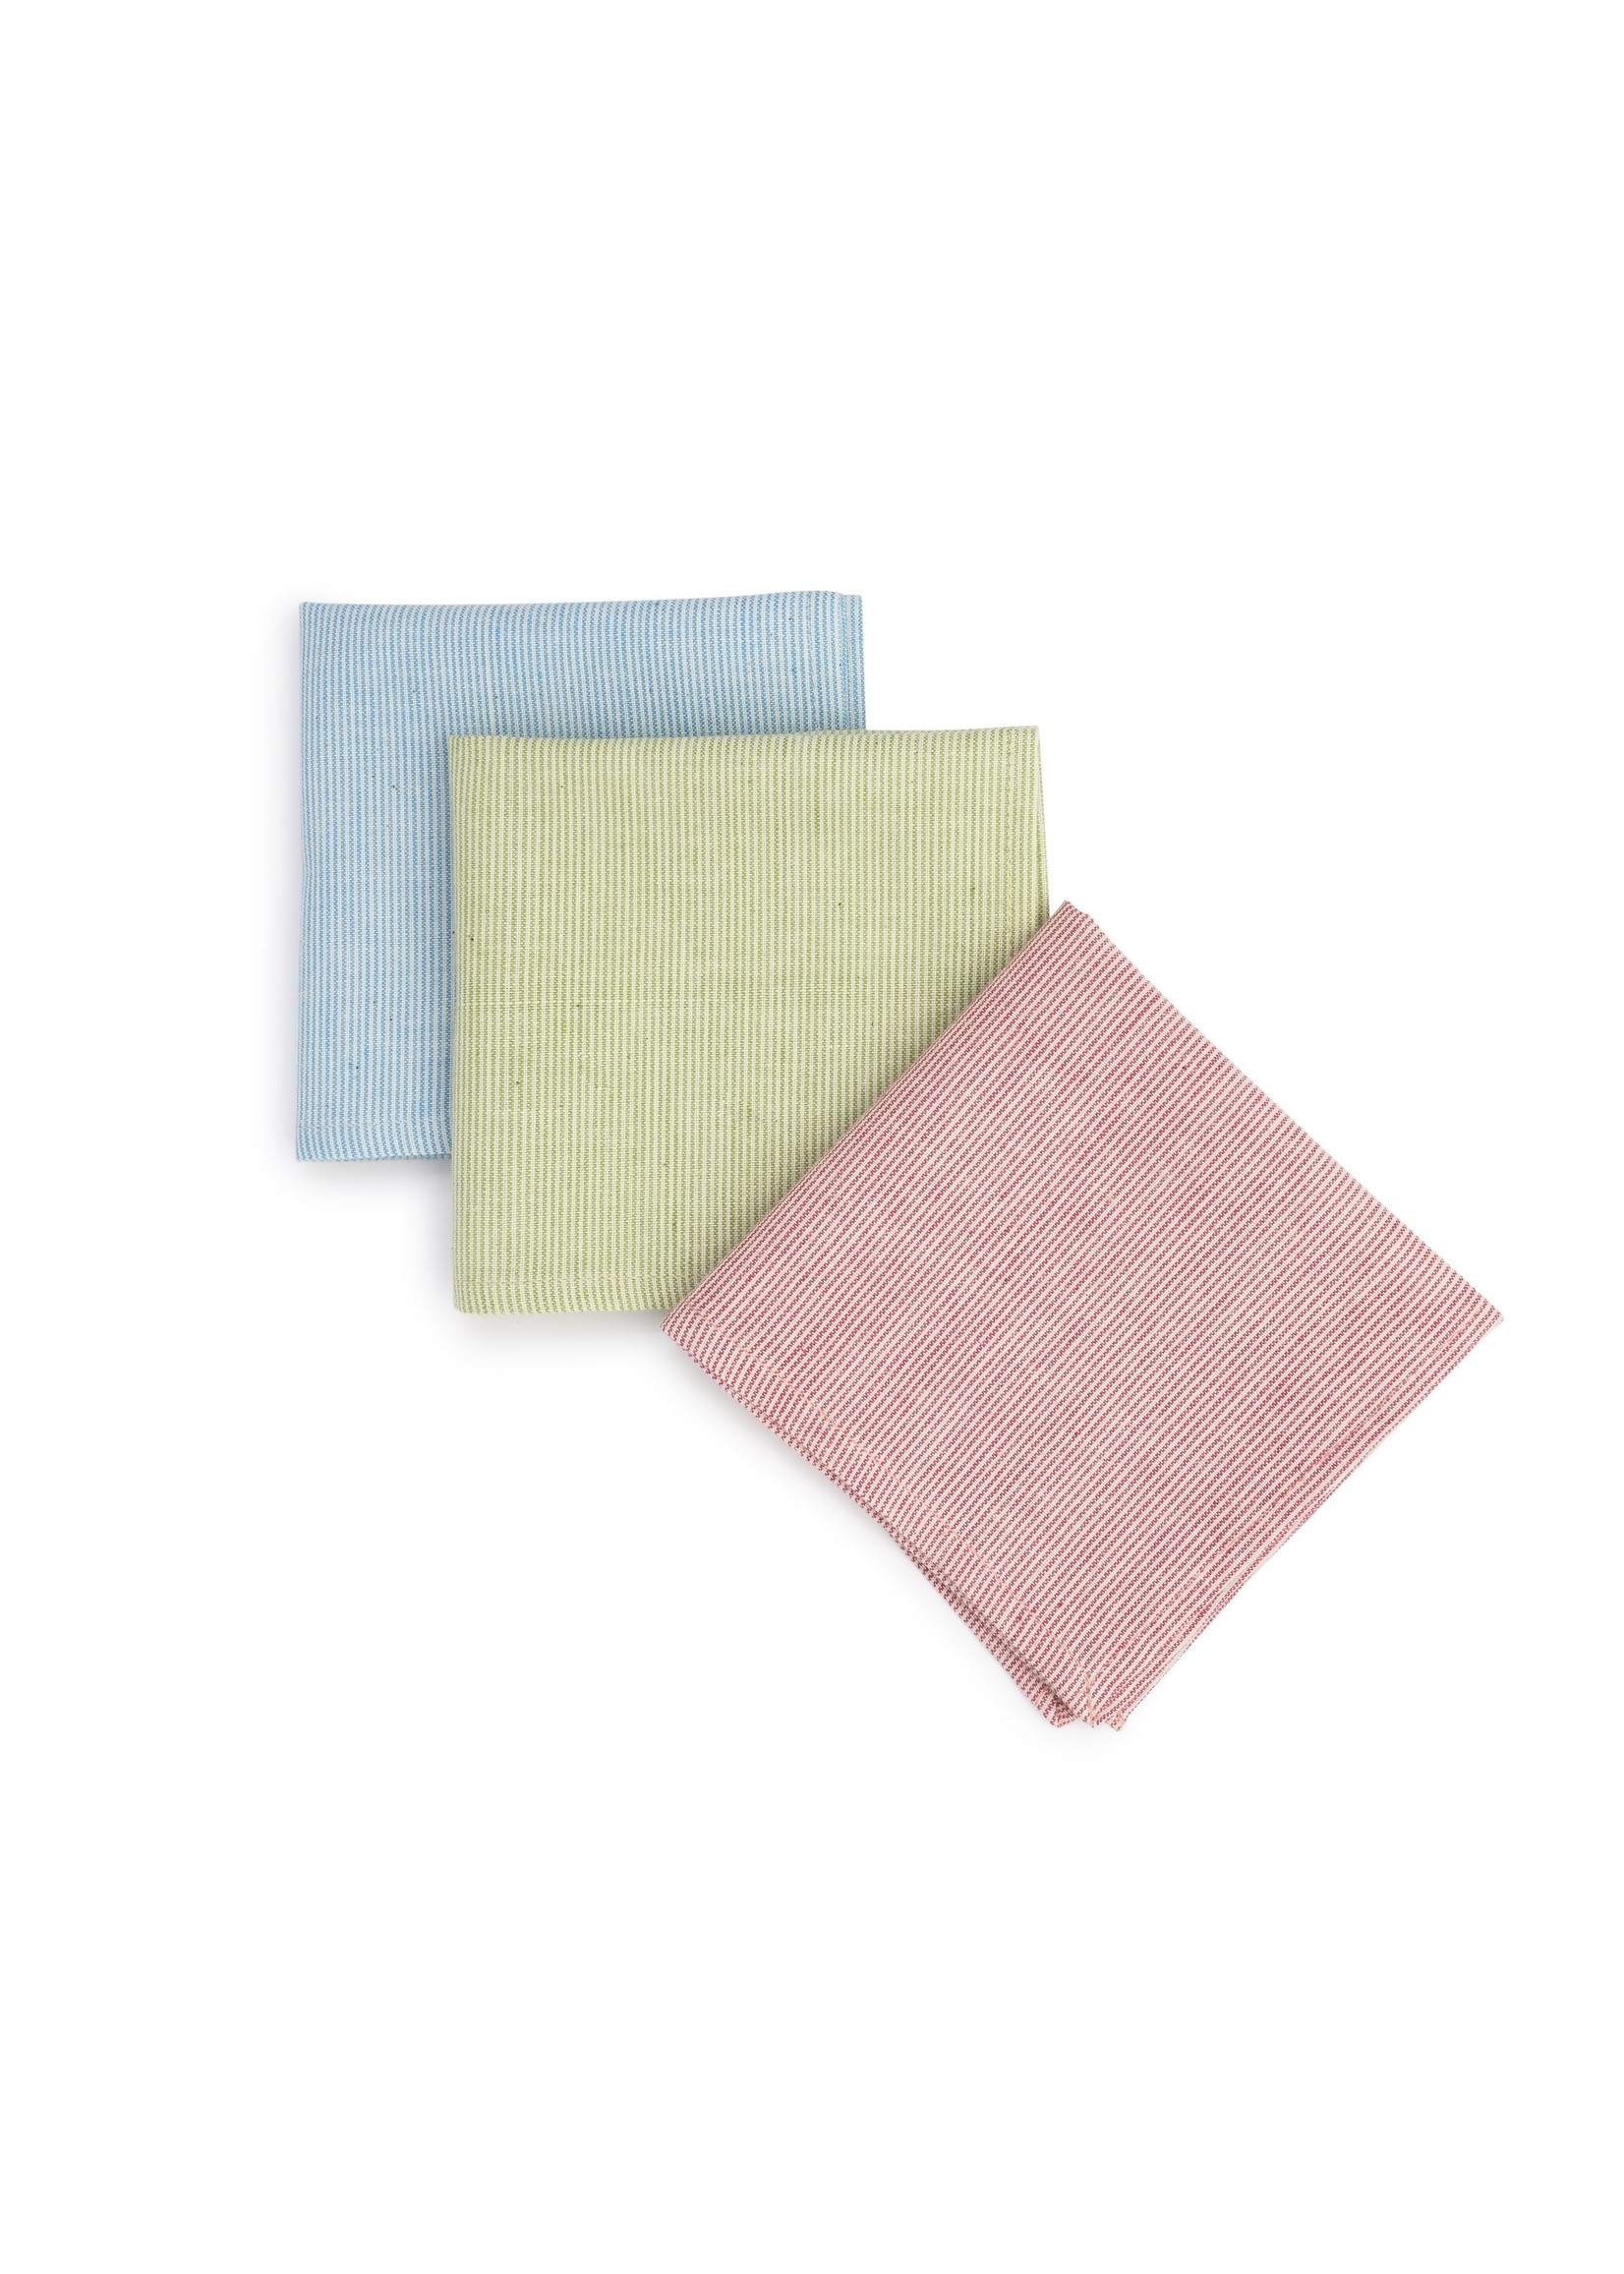 Seattle handkerchiefs s/3 9x9" hand woven cotton